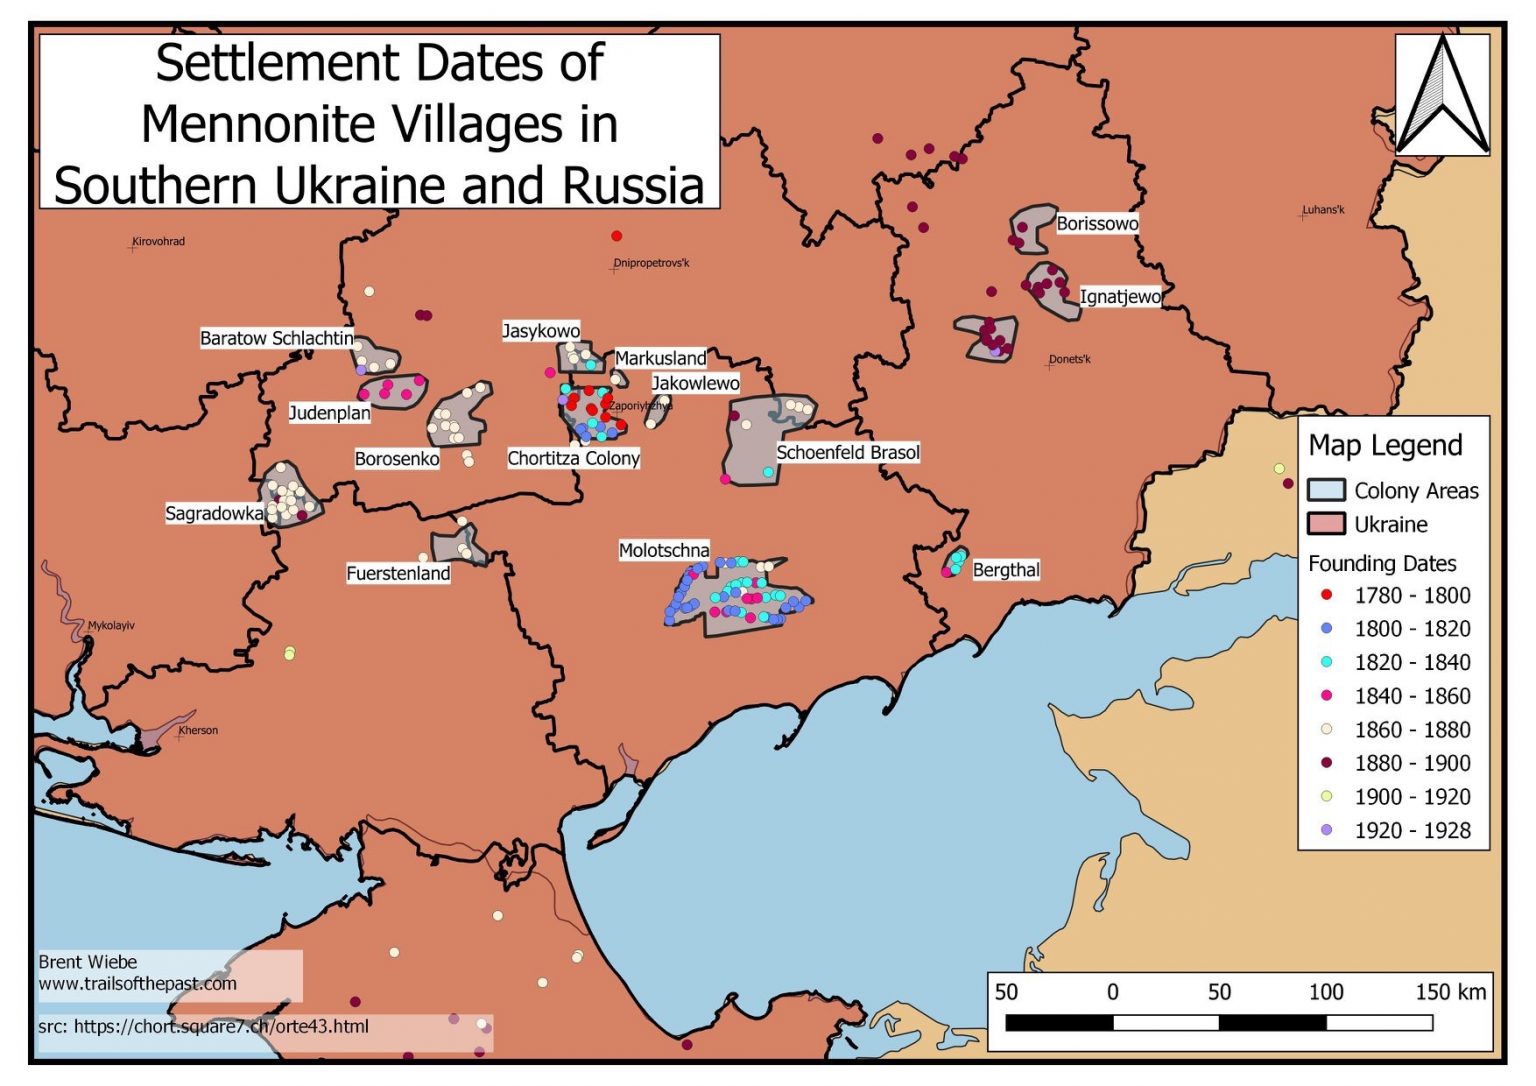 Russian Mennonite Settlements Dates of Founding